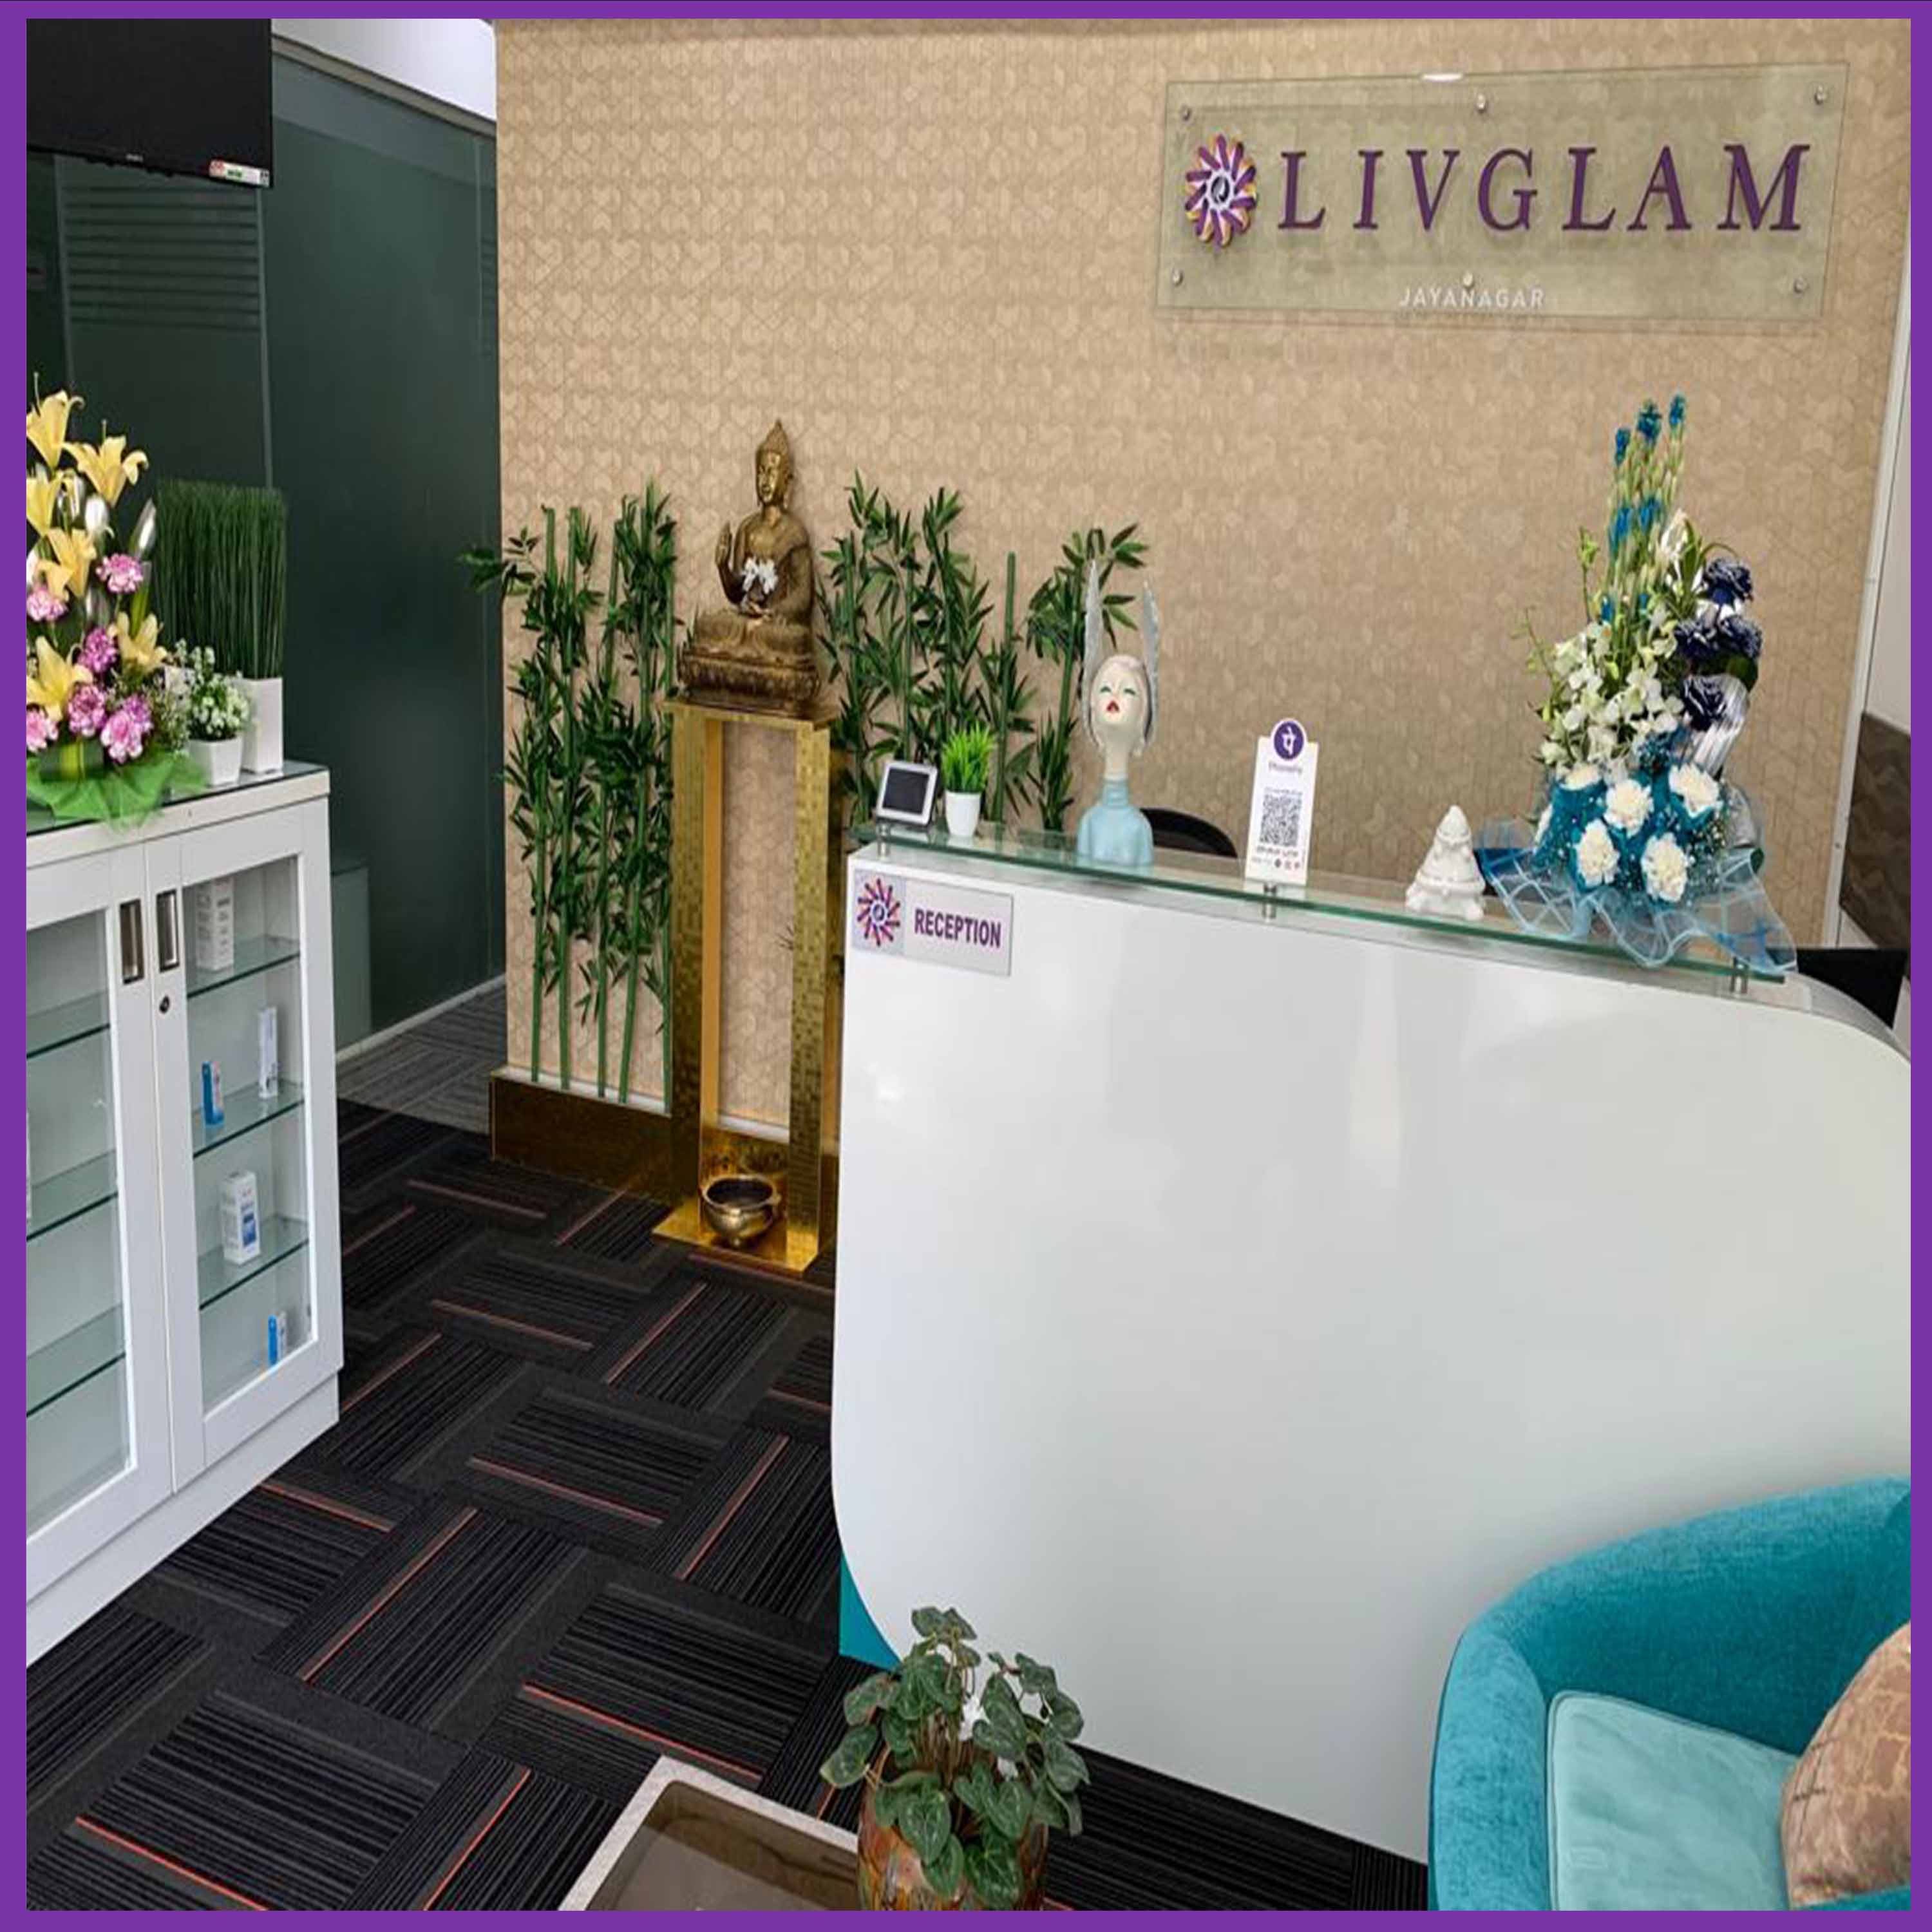 Livglam Clinic - Reception